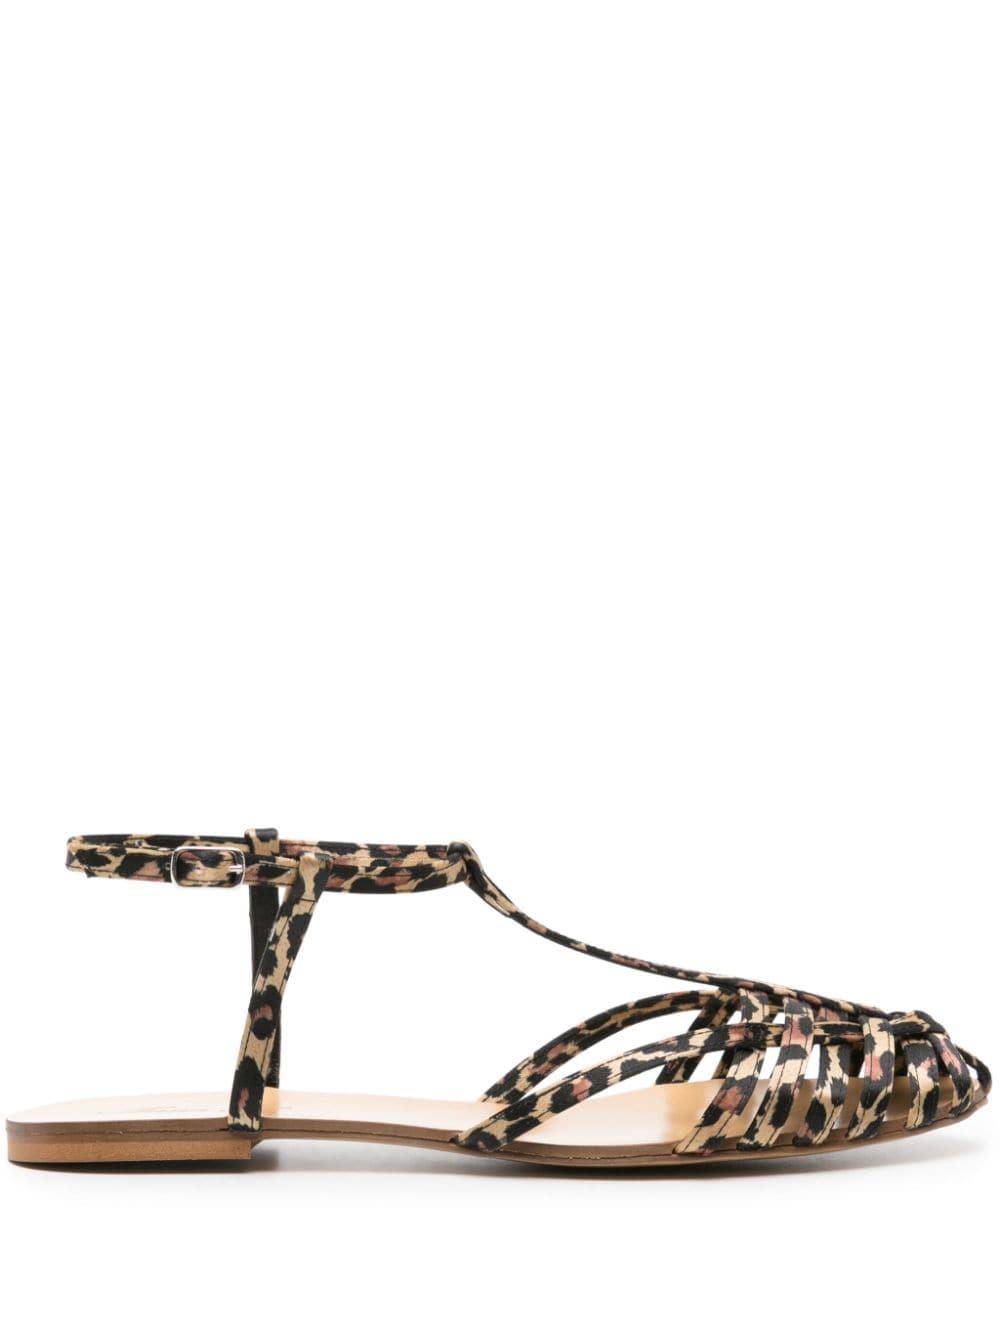 leopard-print satin sandals